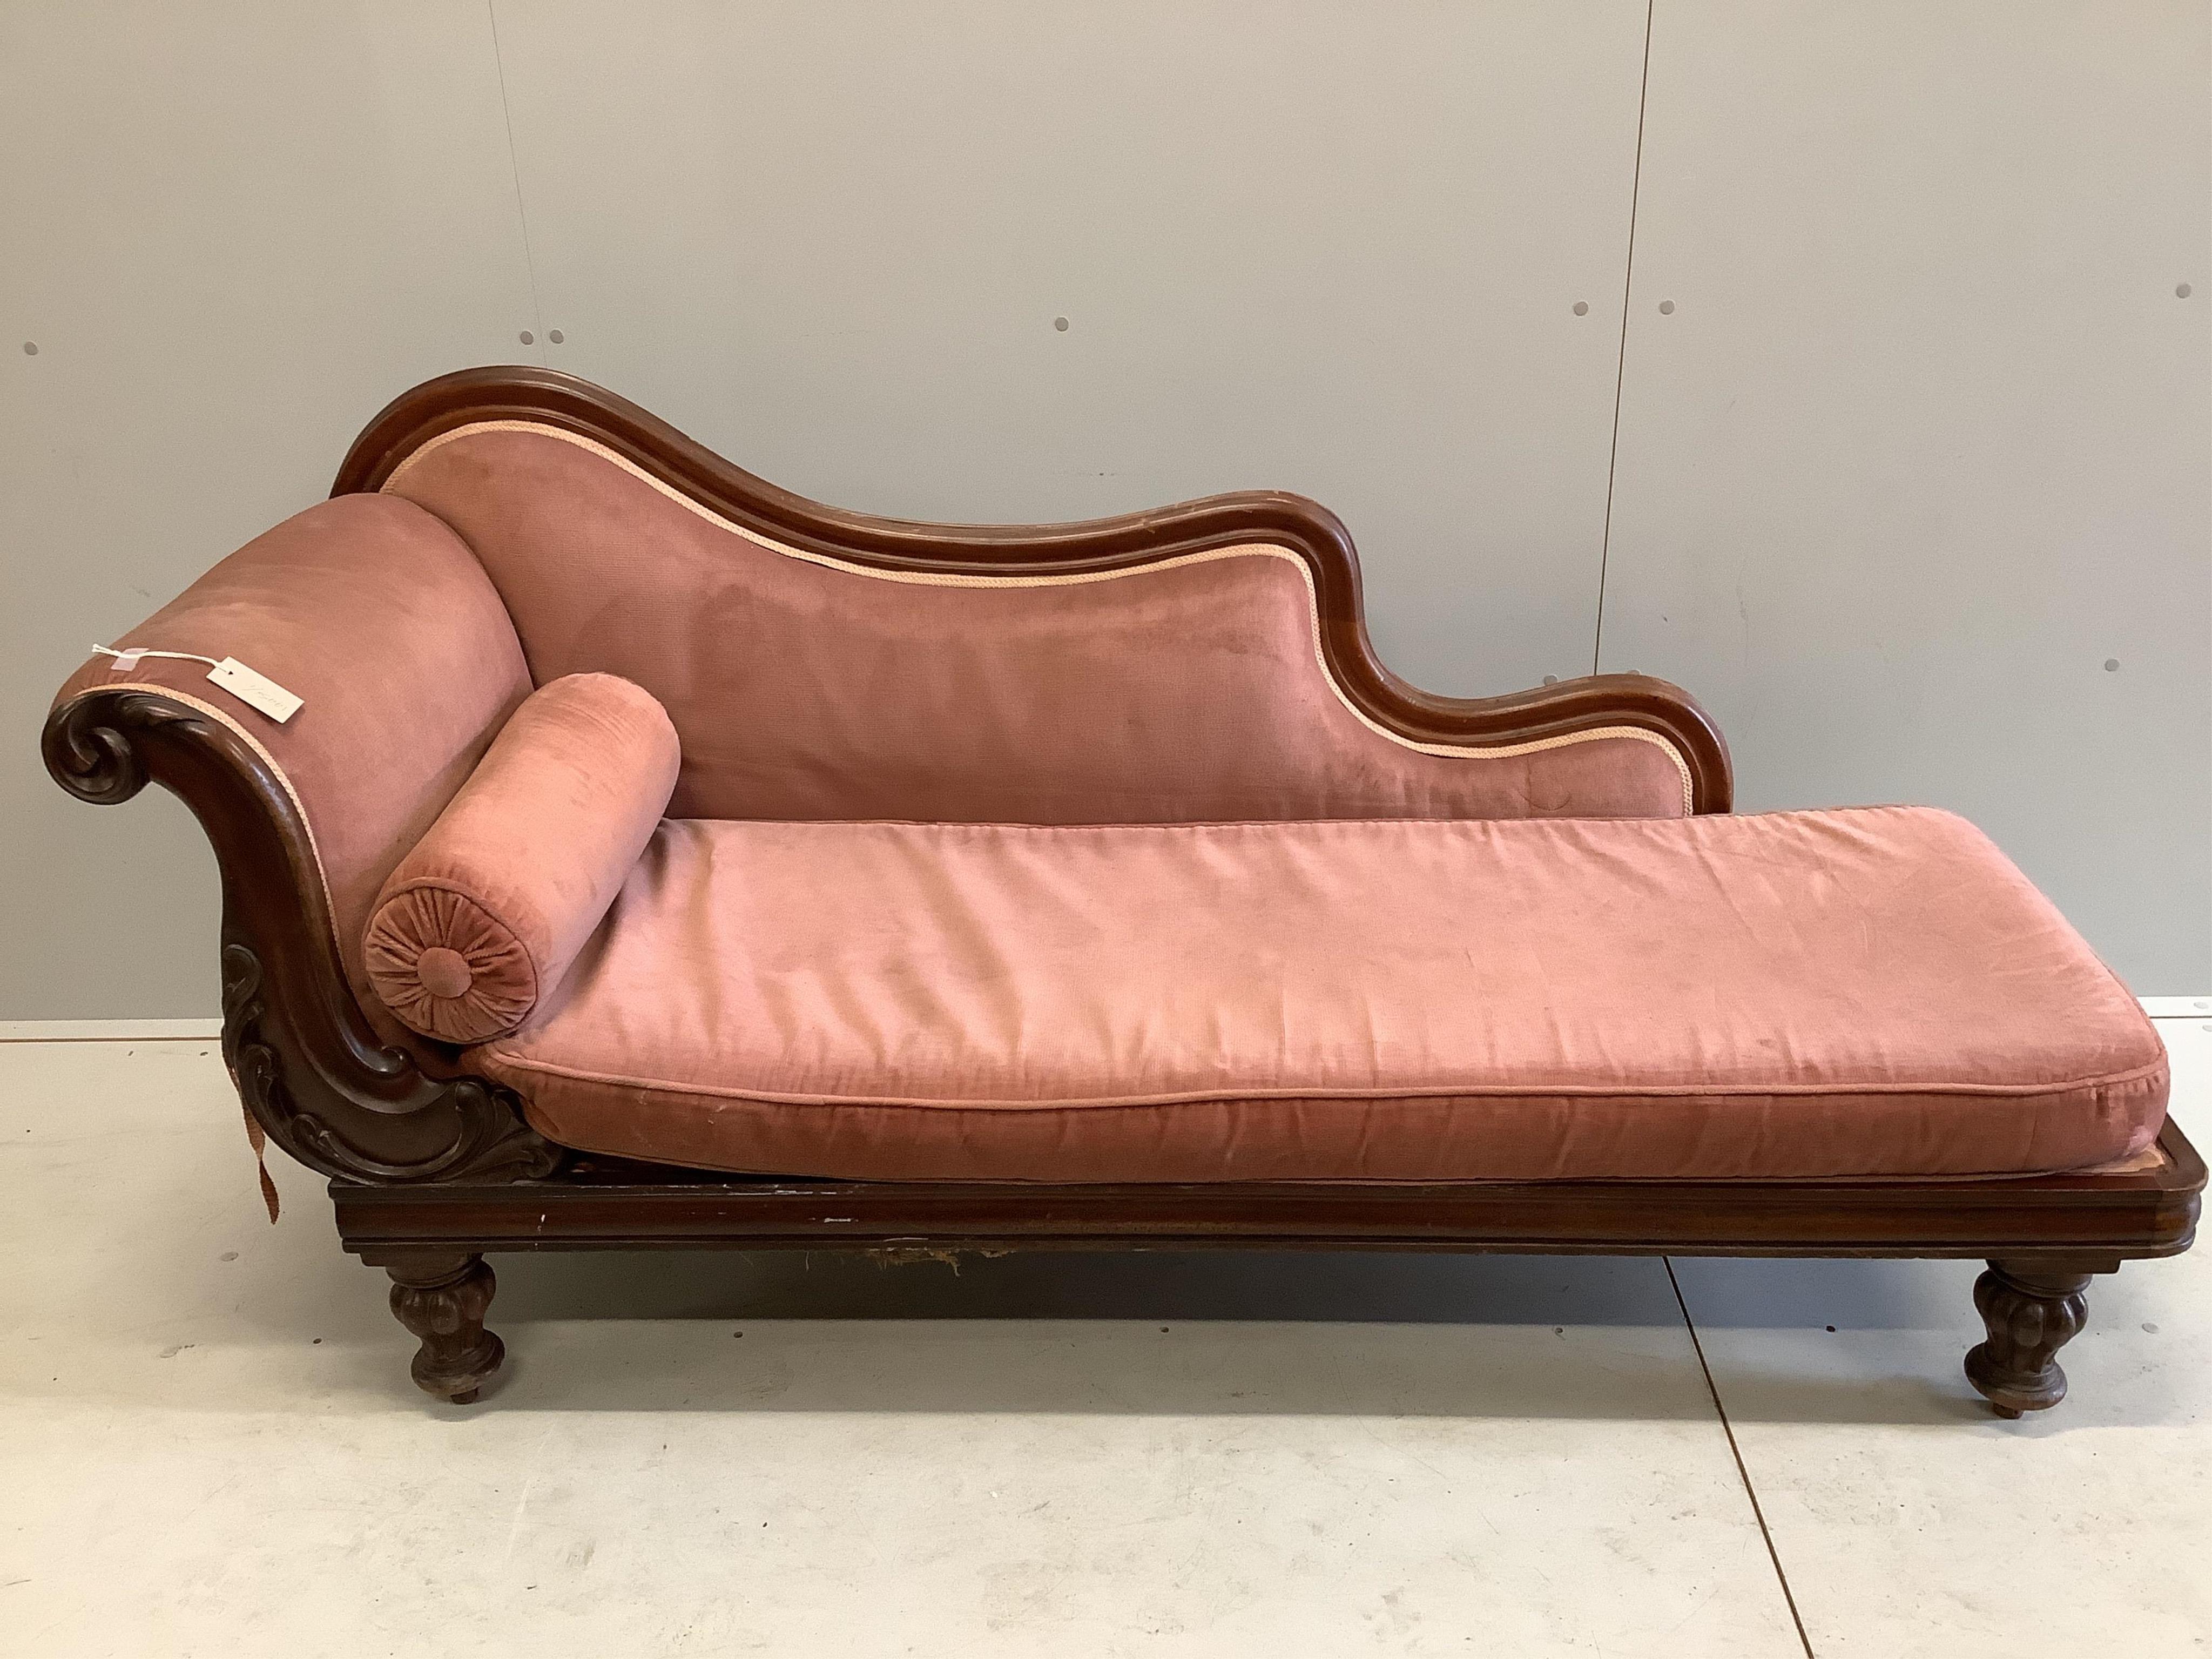 A Victorian mahogany chaise longue, width 174cm, depth 61cm, height 80cm. Condition - fair